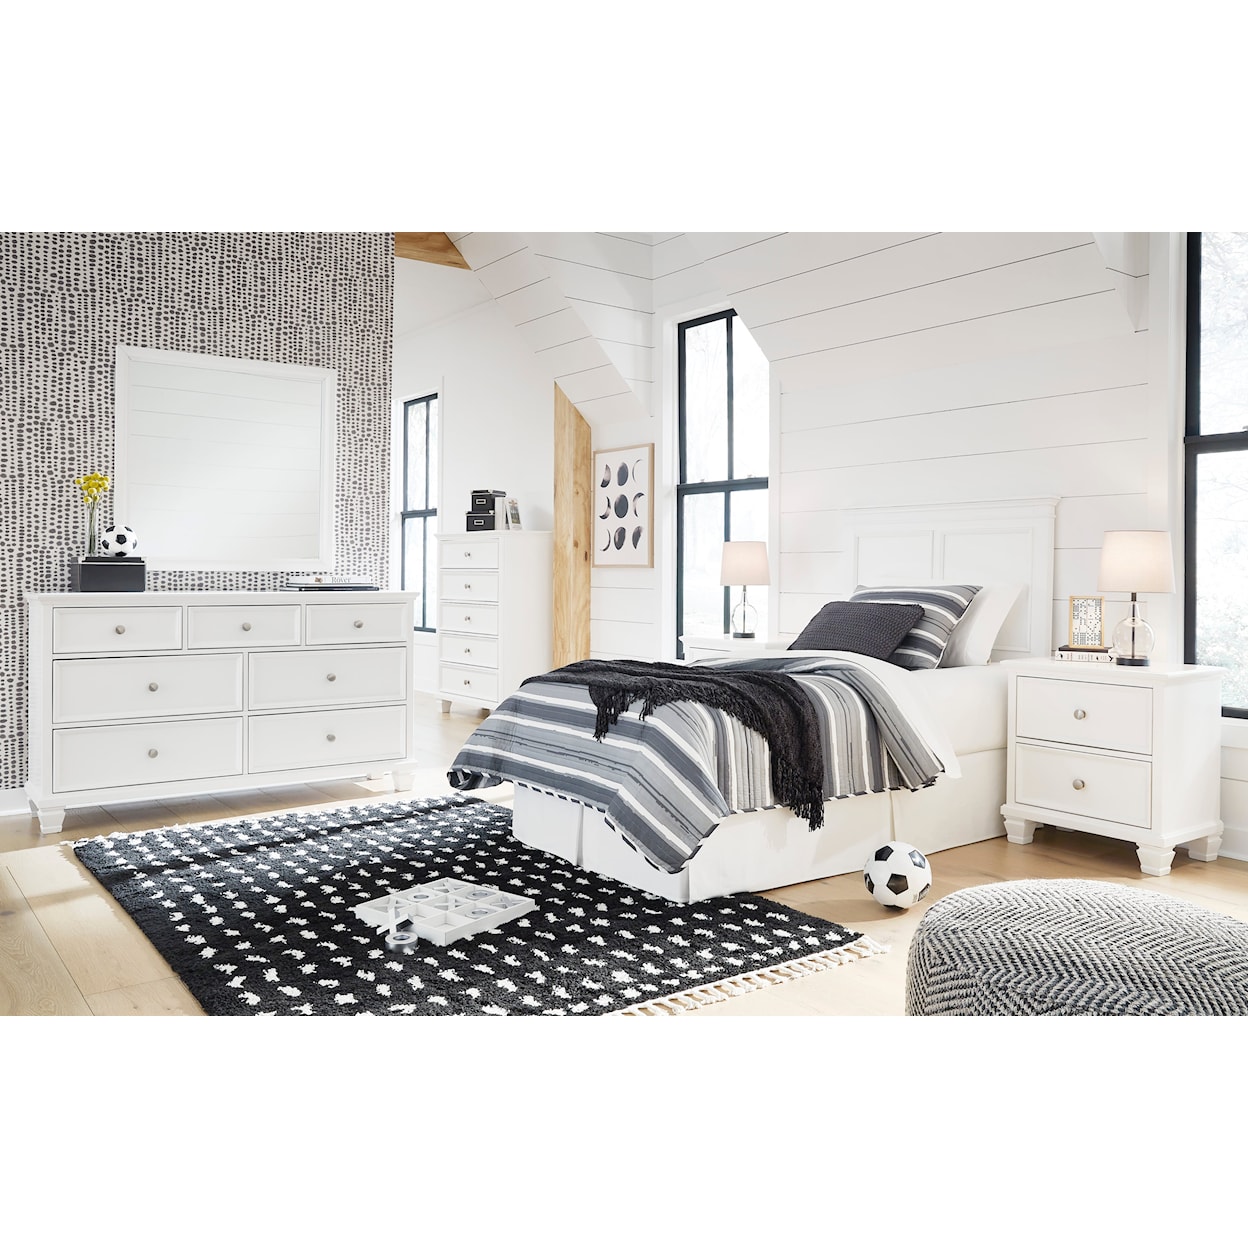 Ashley Furniture Signature Design Fortman Twin Bedroom Set